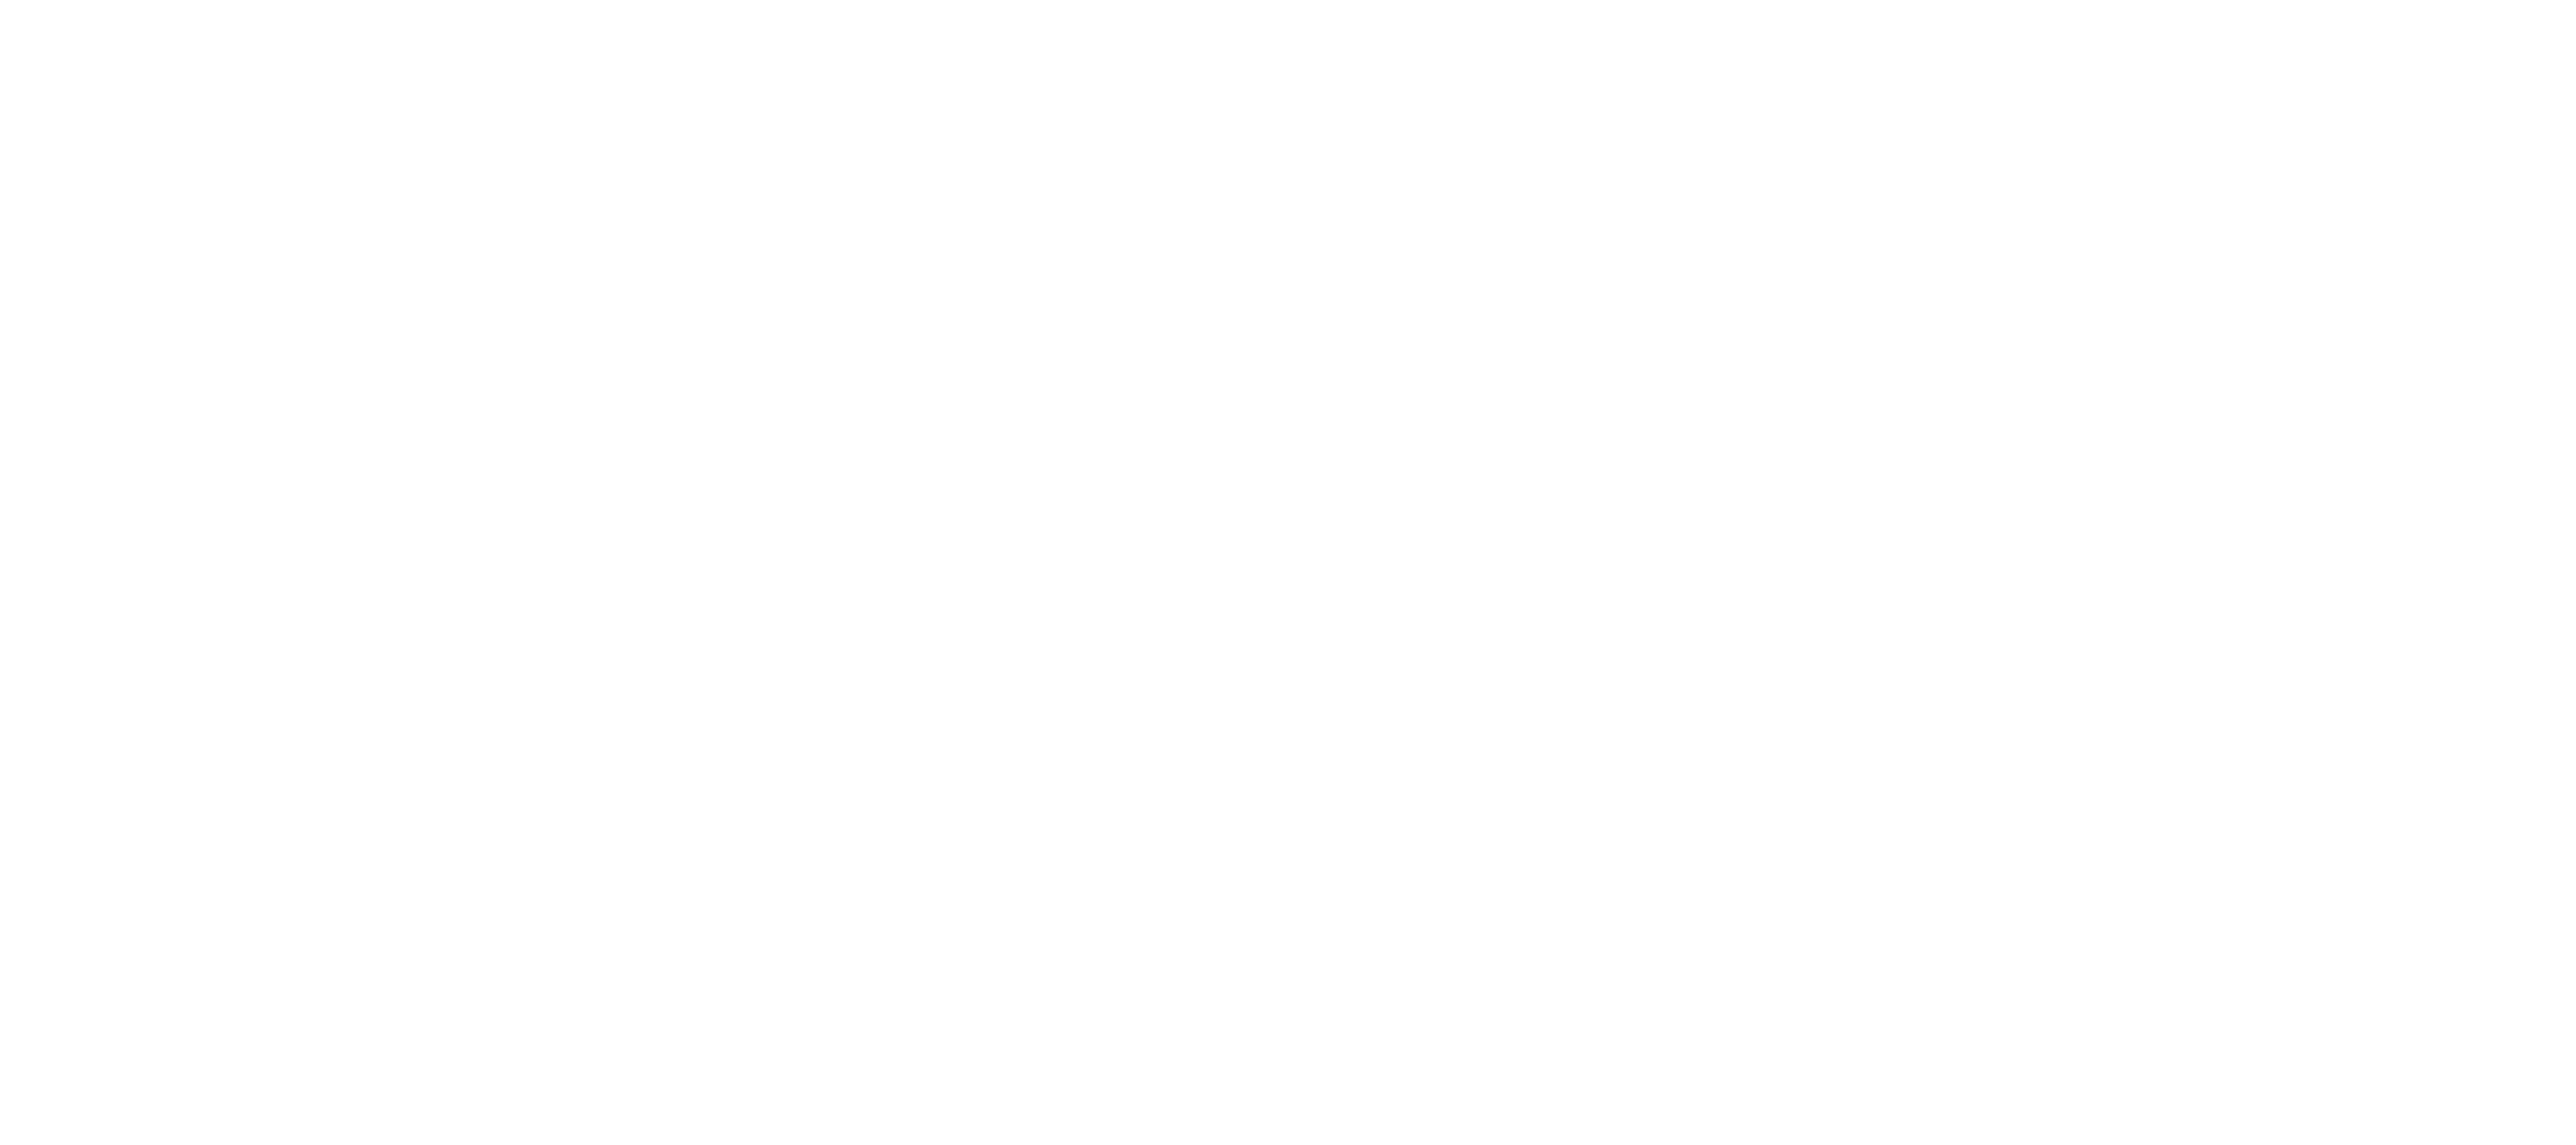 FaithCapo Forums